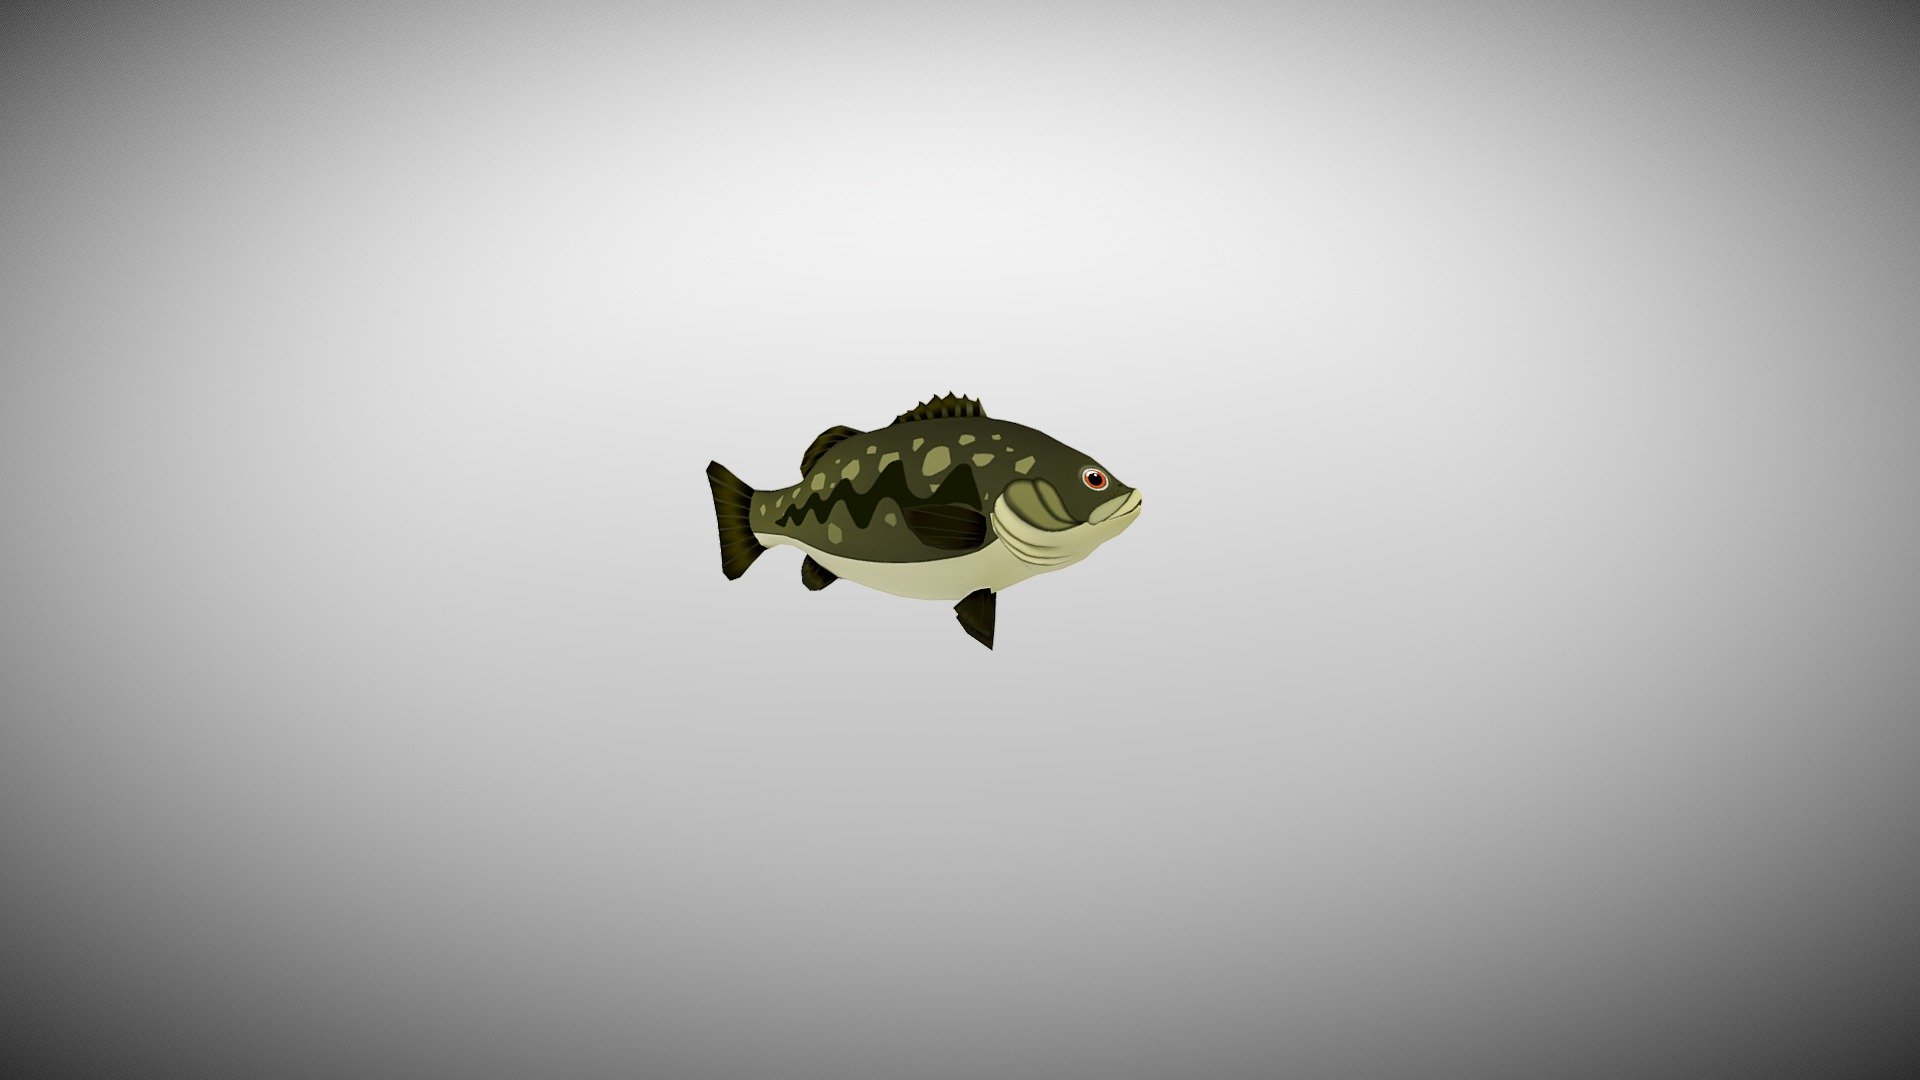 LM Bass Toon - 3D model by Sumeet Arora (@ls.rightbrain) 3d model